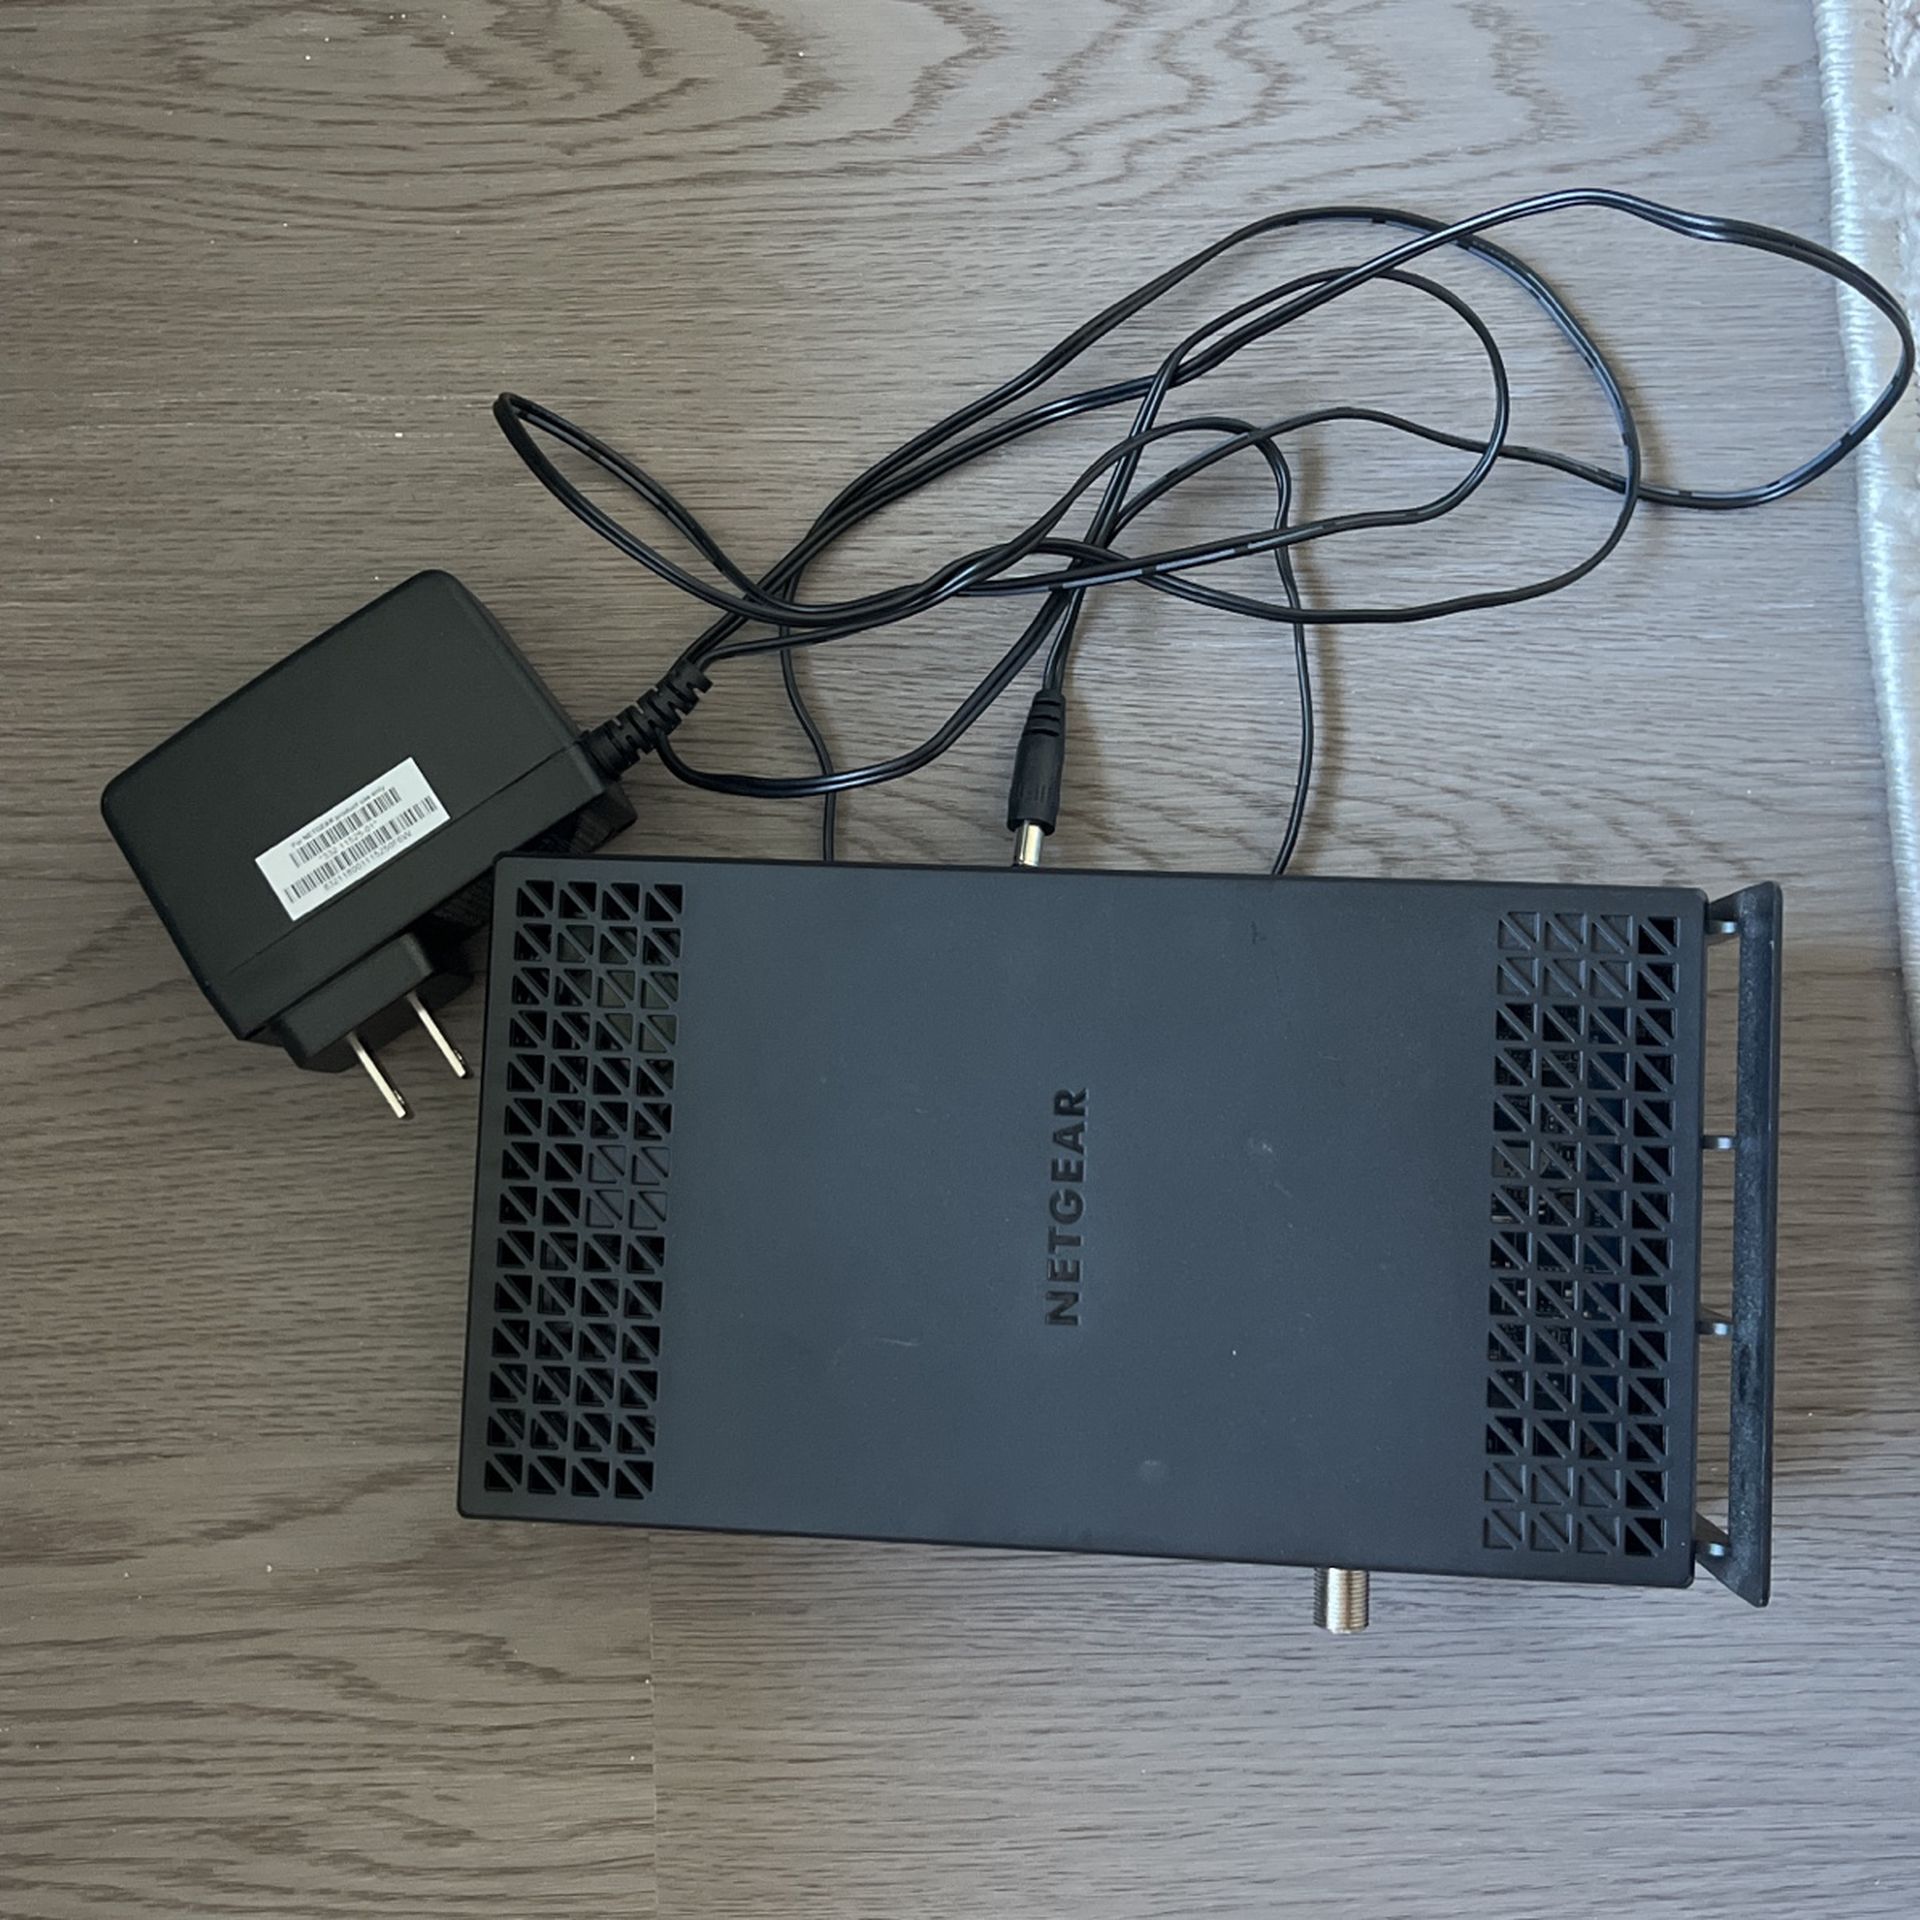 Netgear AC1200 WiFi Cable Modem Router Combo